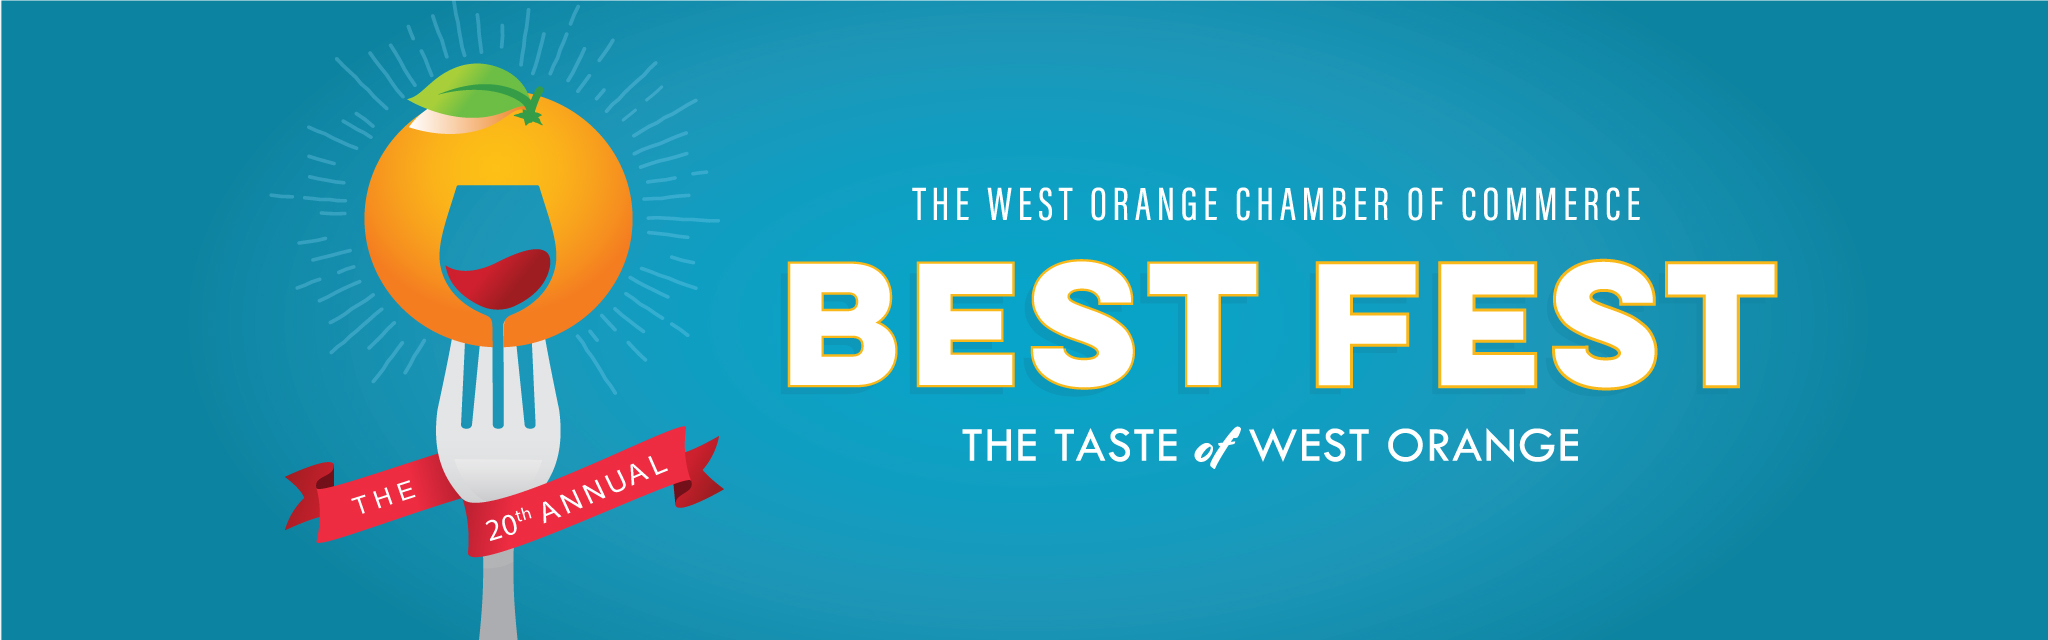 Best Fest – “The Taste of West Orange”